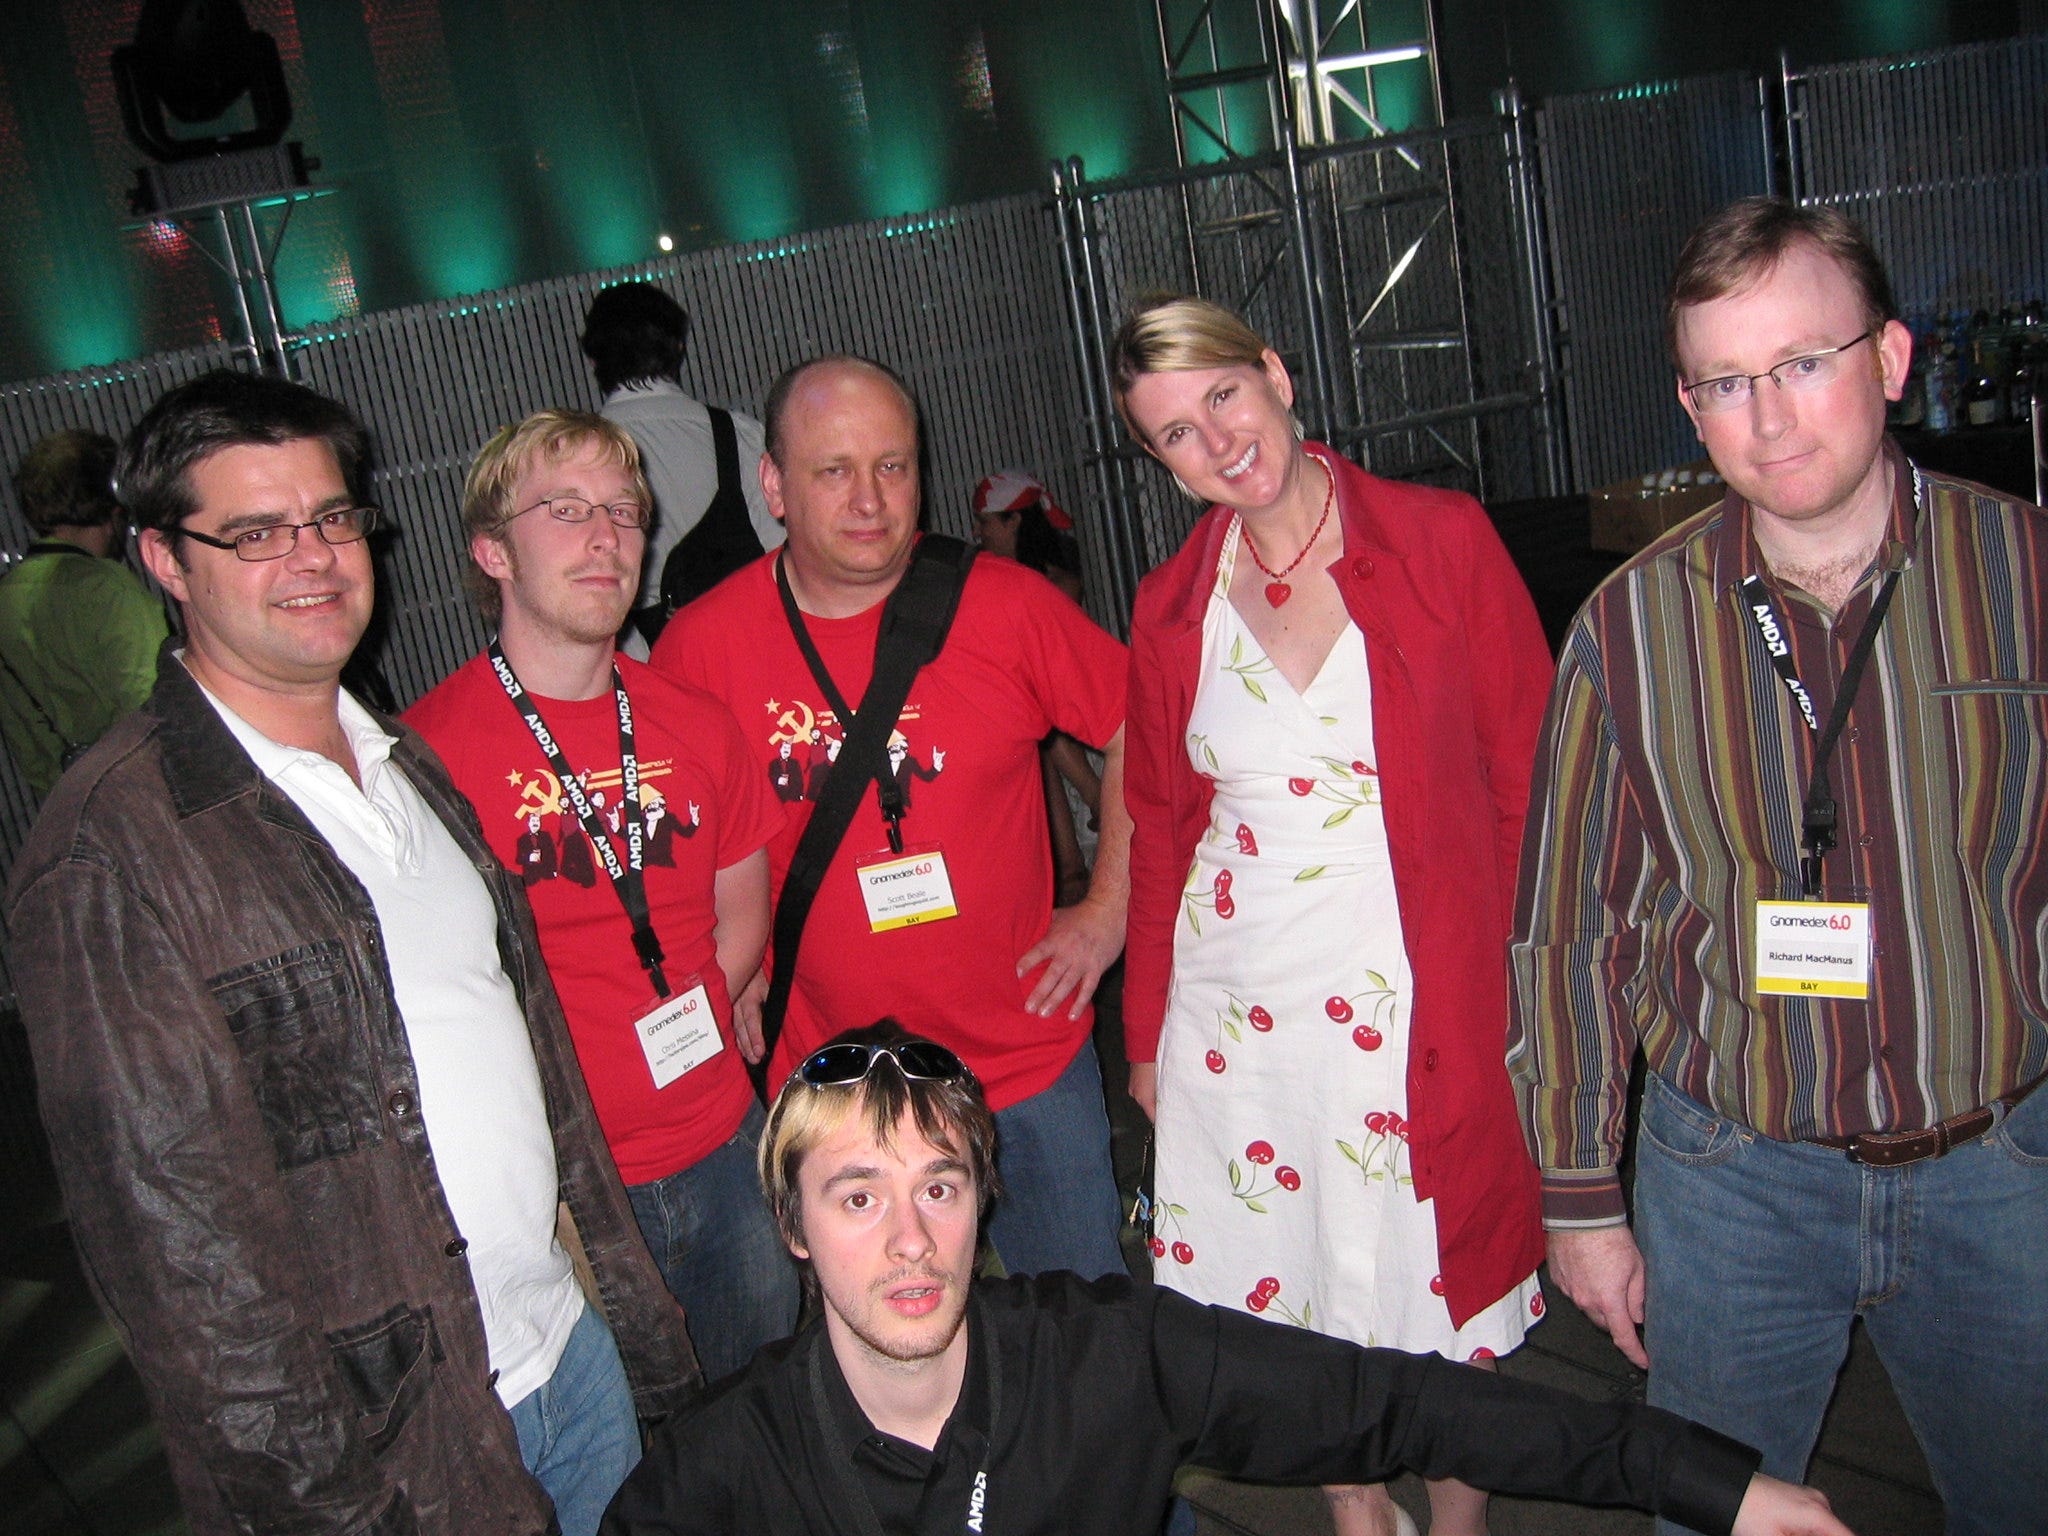 At Gnomedex, 2 July 2006